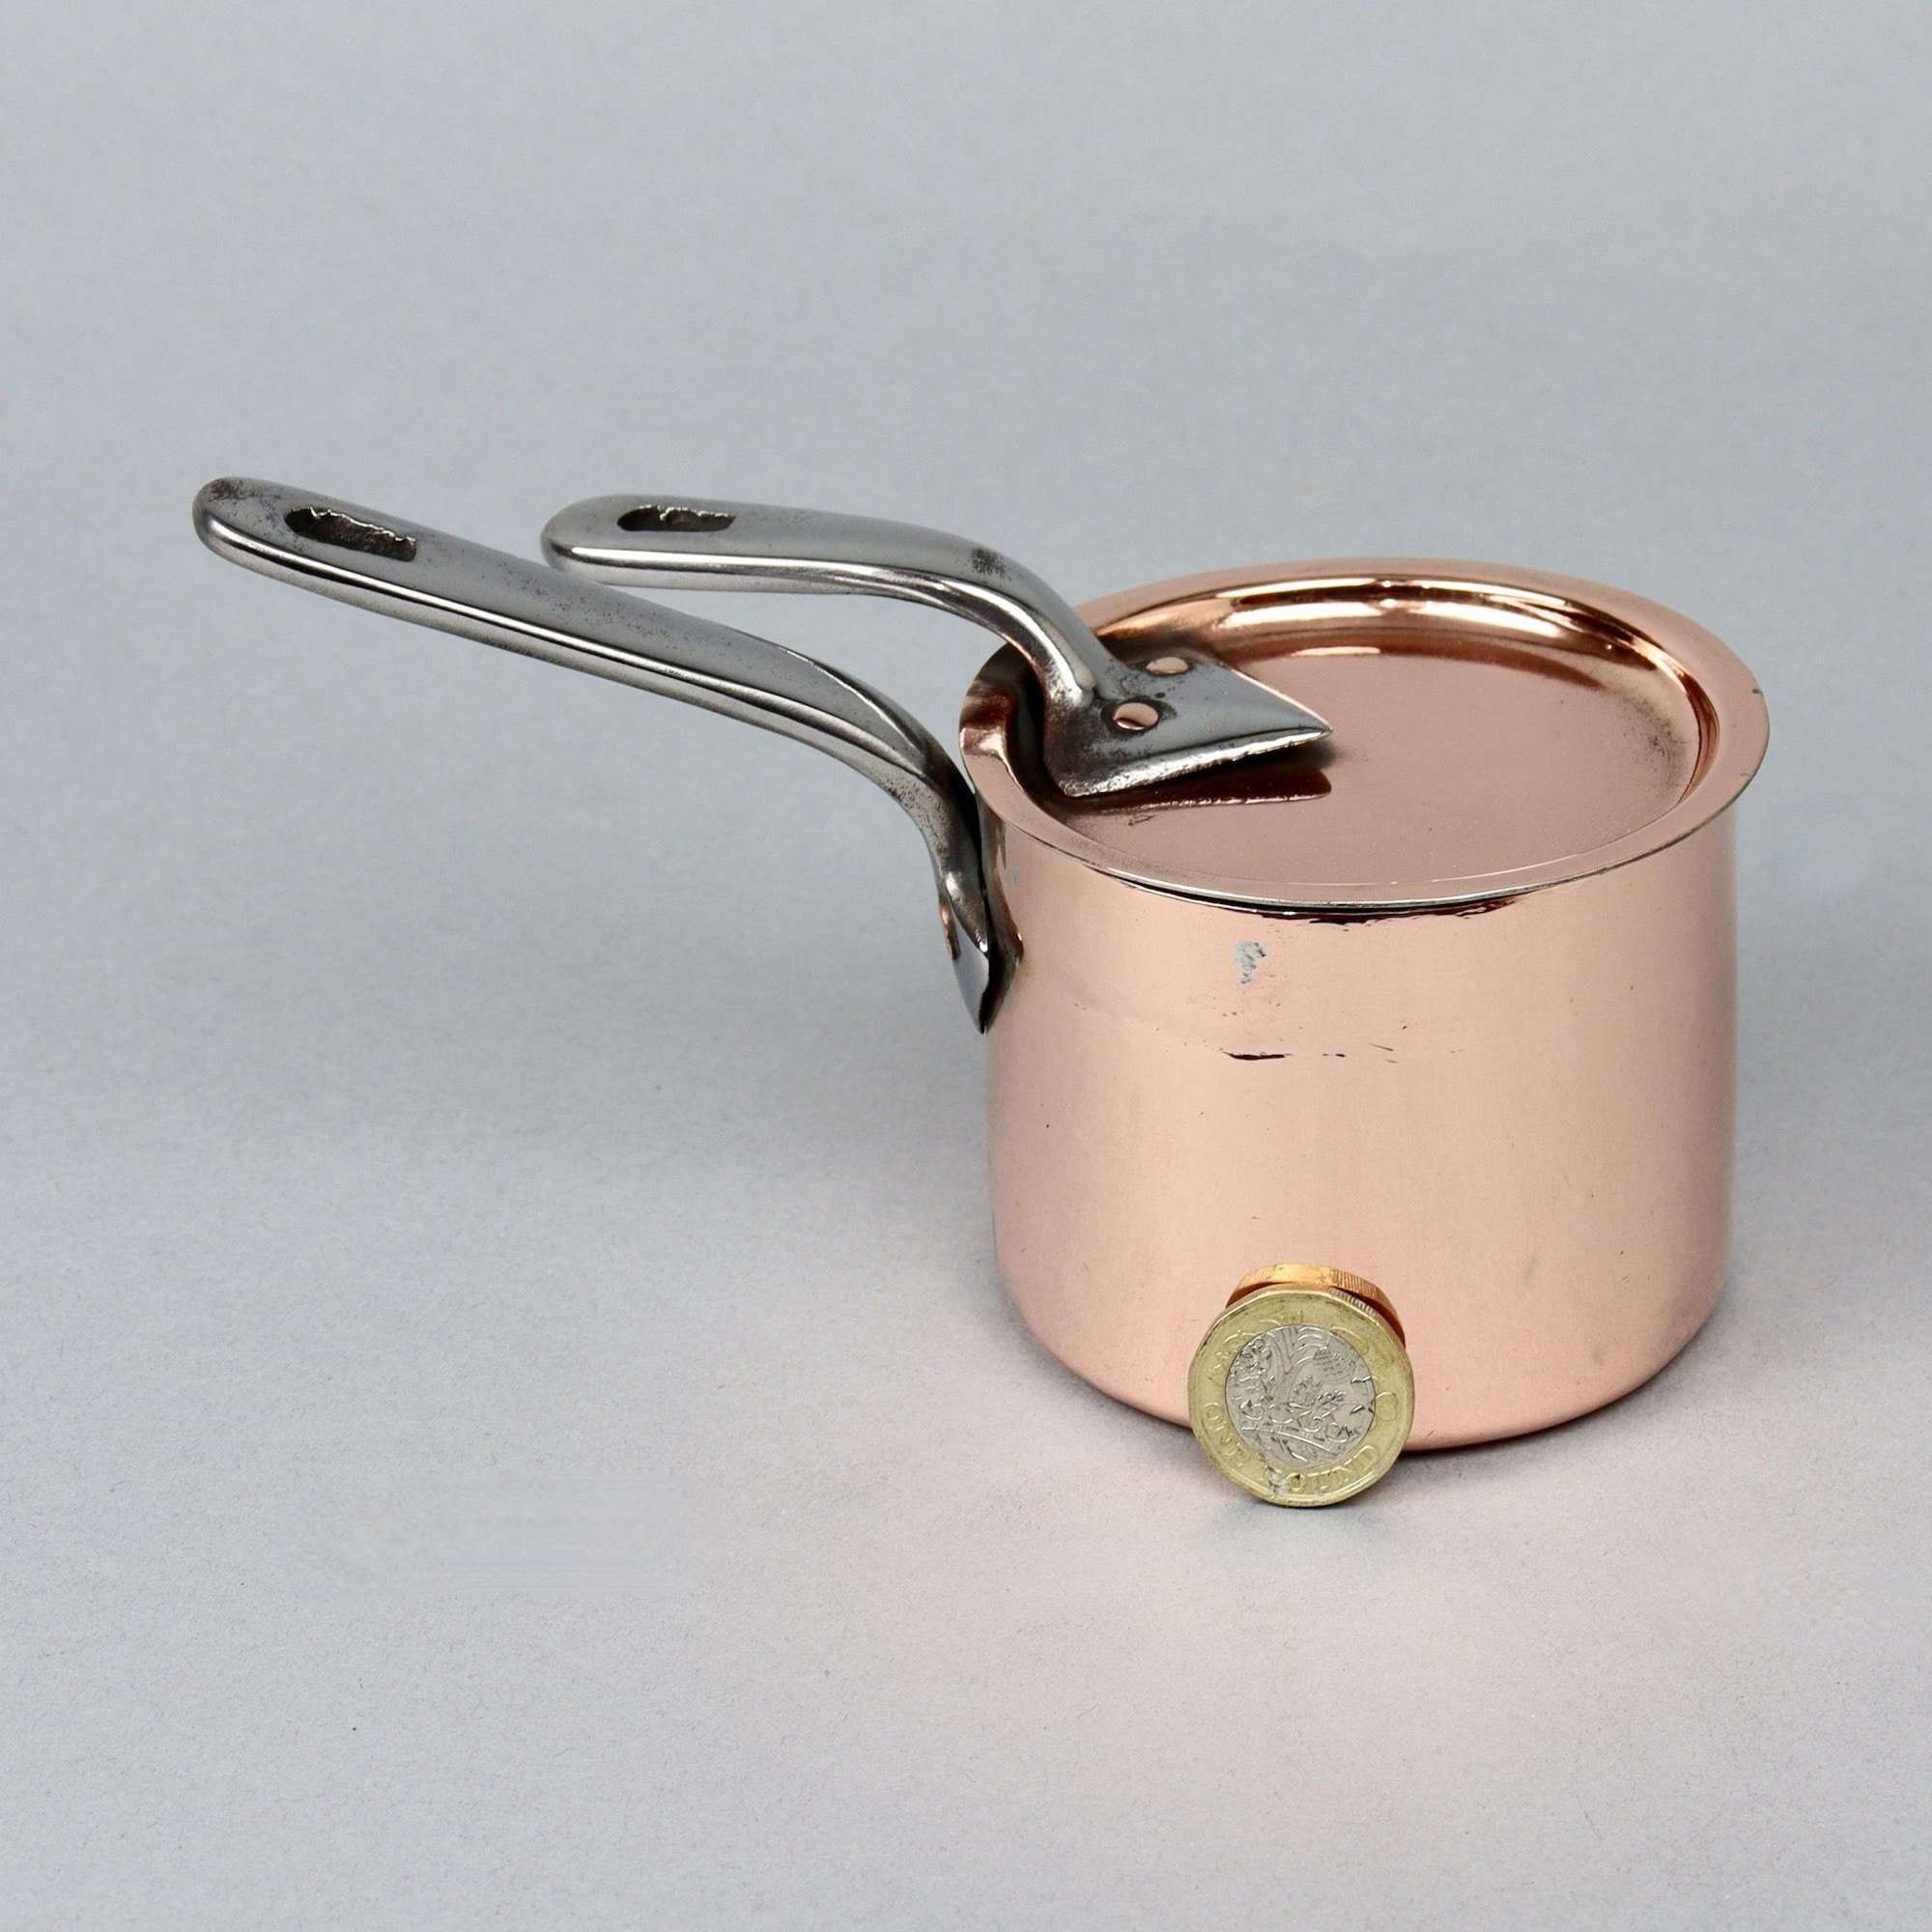 Tiny Copper Saucepan by Benhams